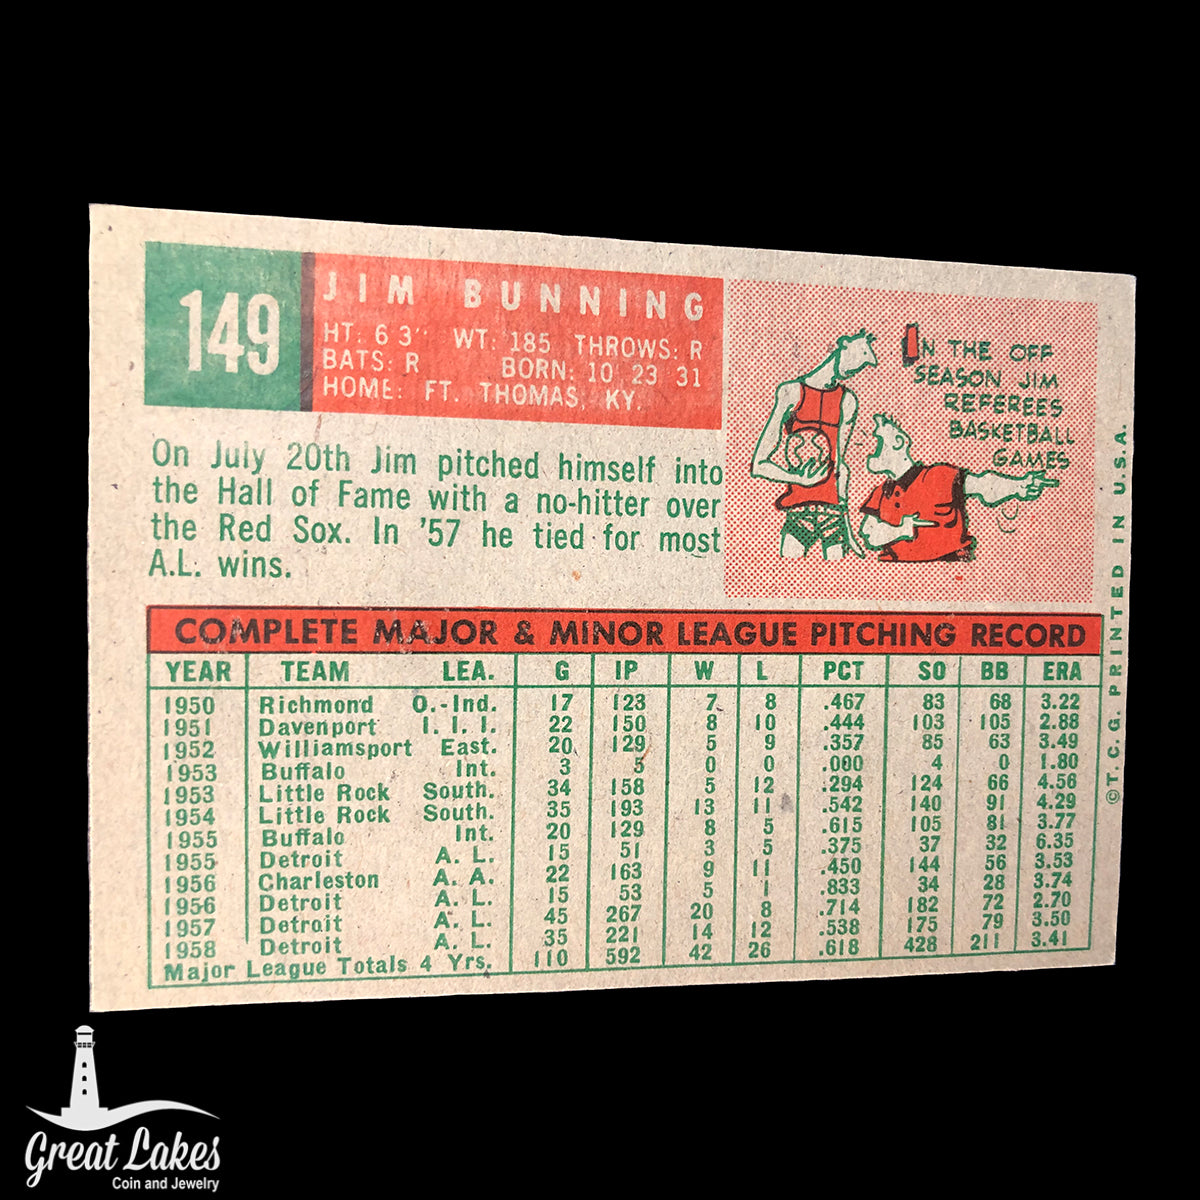 1959 Topps Jim Bunning Card #149